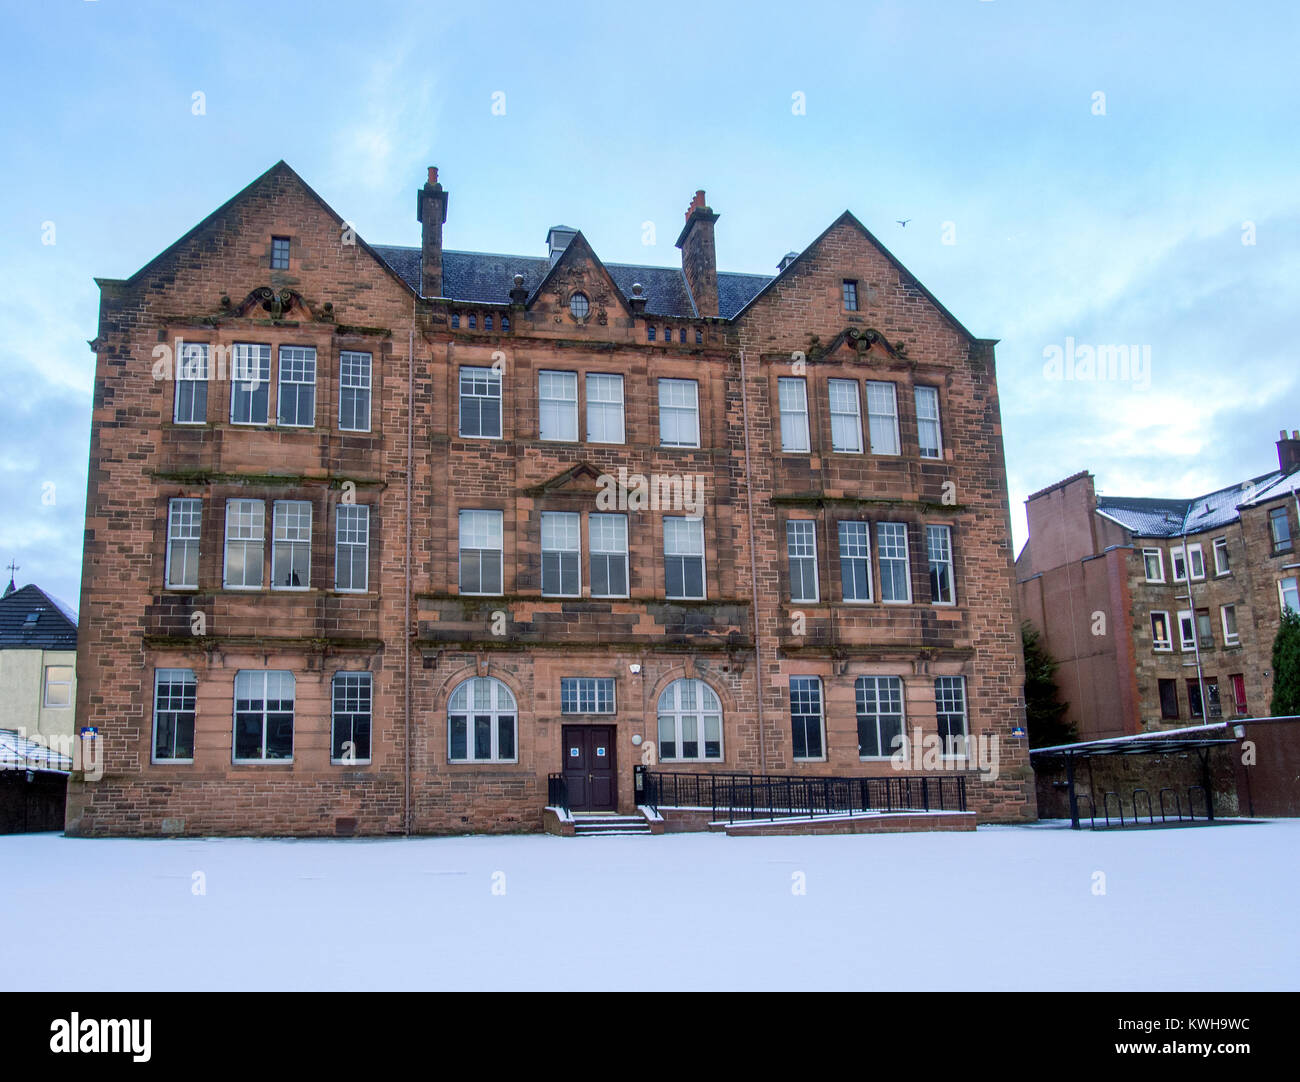 RUTHERGLEN, SCOTLAND - DECEMBER 29 2017: The old Burgh school in the snow. Stock Photo